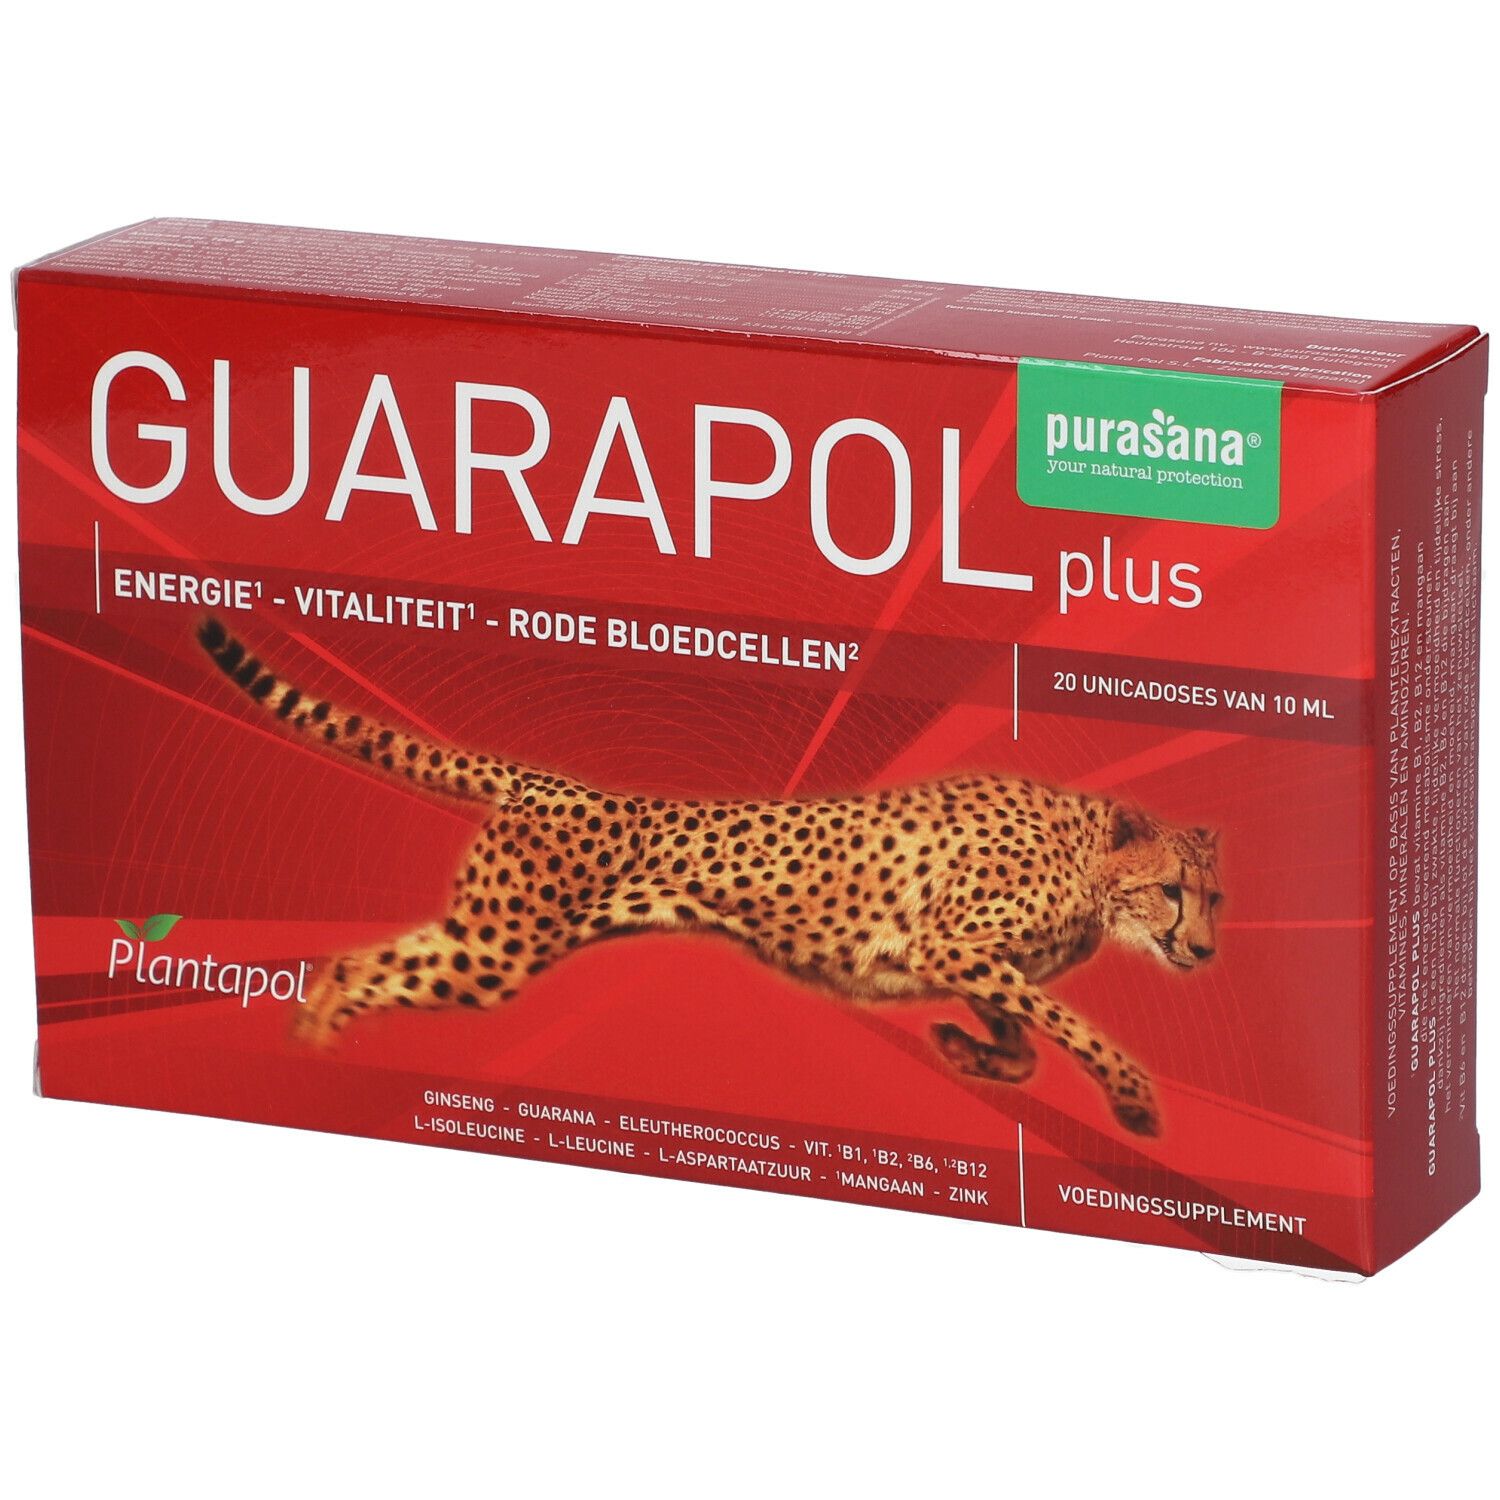 purasana® Guarapol Plus